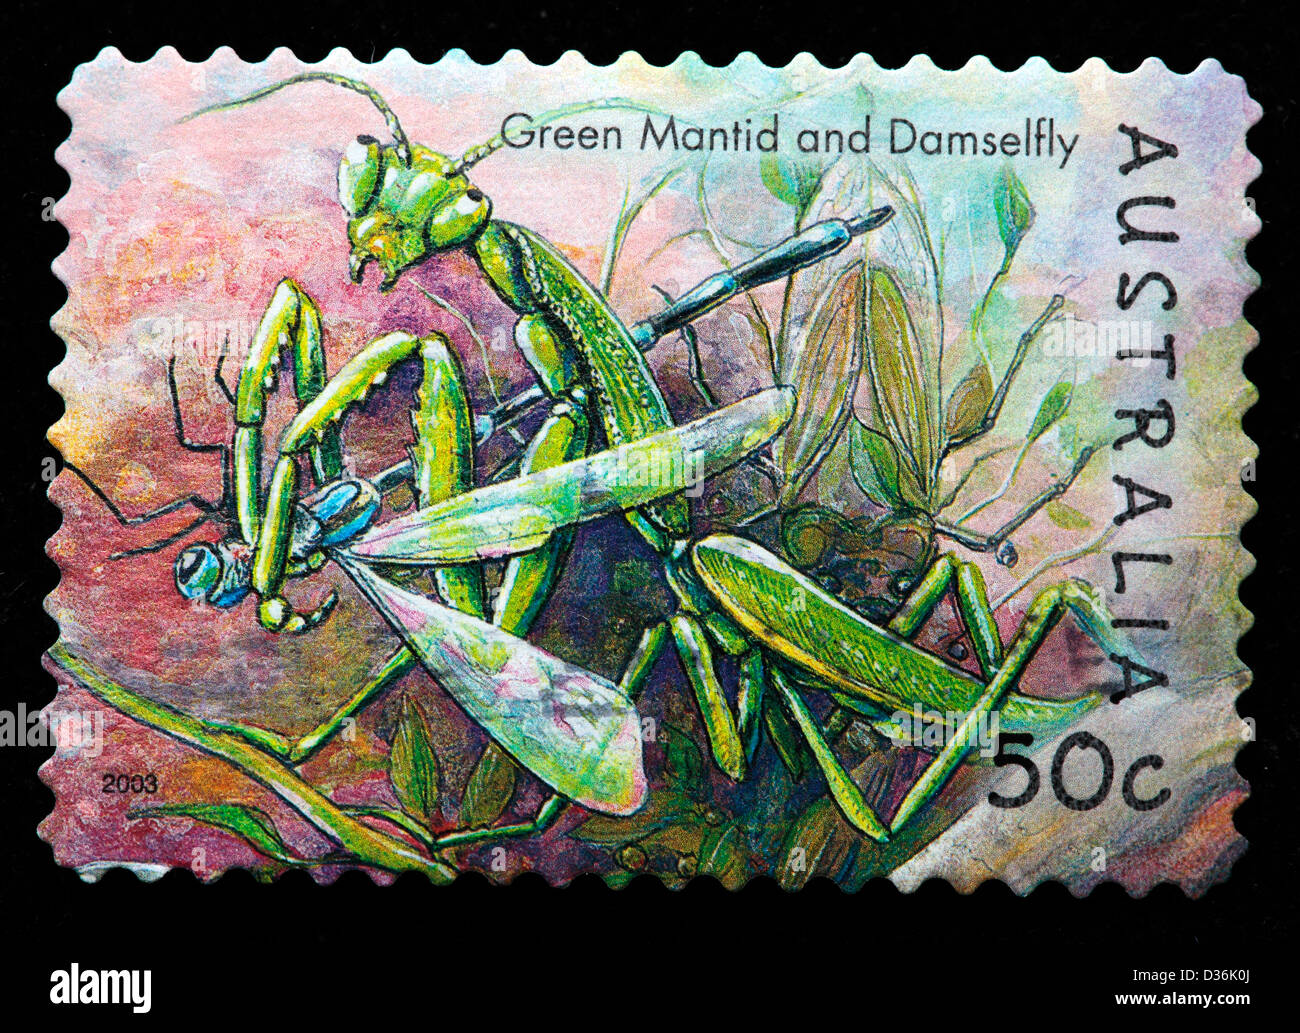 Verde e Mantid damselfly, francobollo, Australia, 2003 Foto Stock